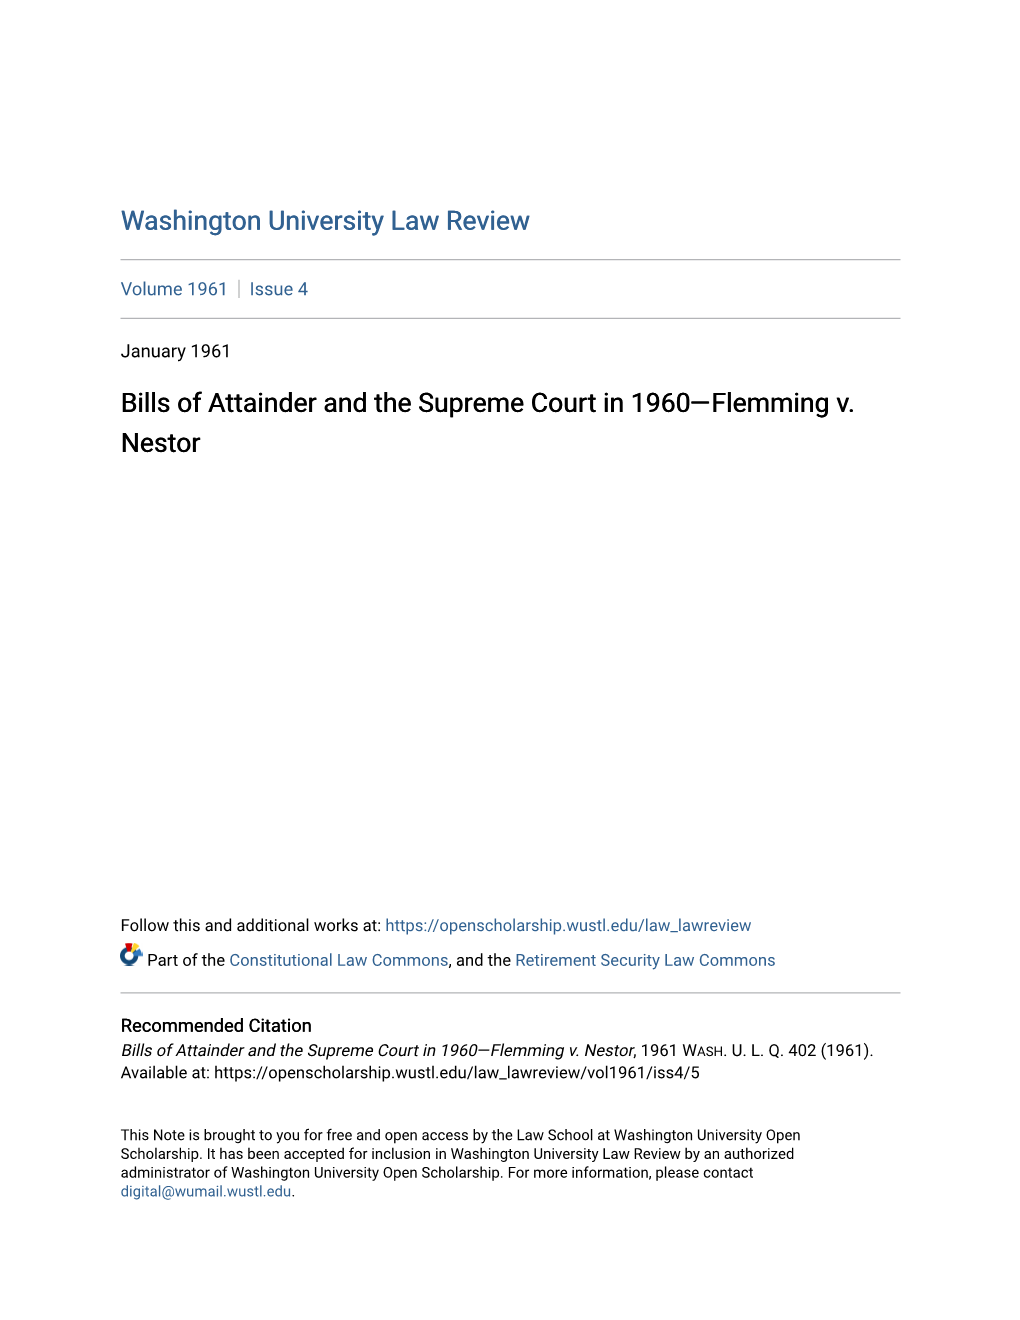 Bills of Attainder and the Supreme Court in 1960—Flemming V. Nestor